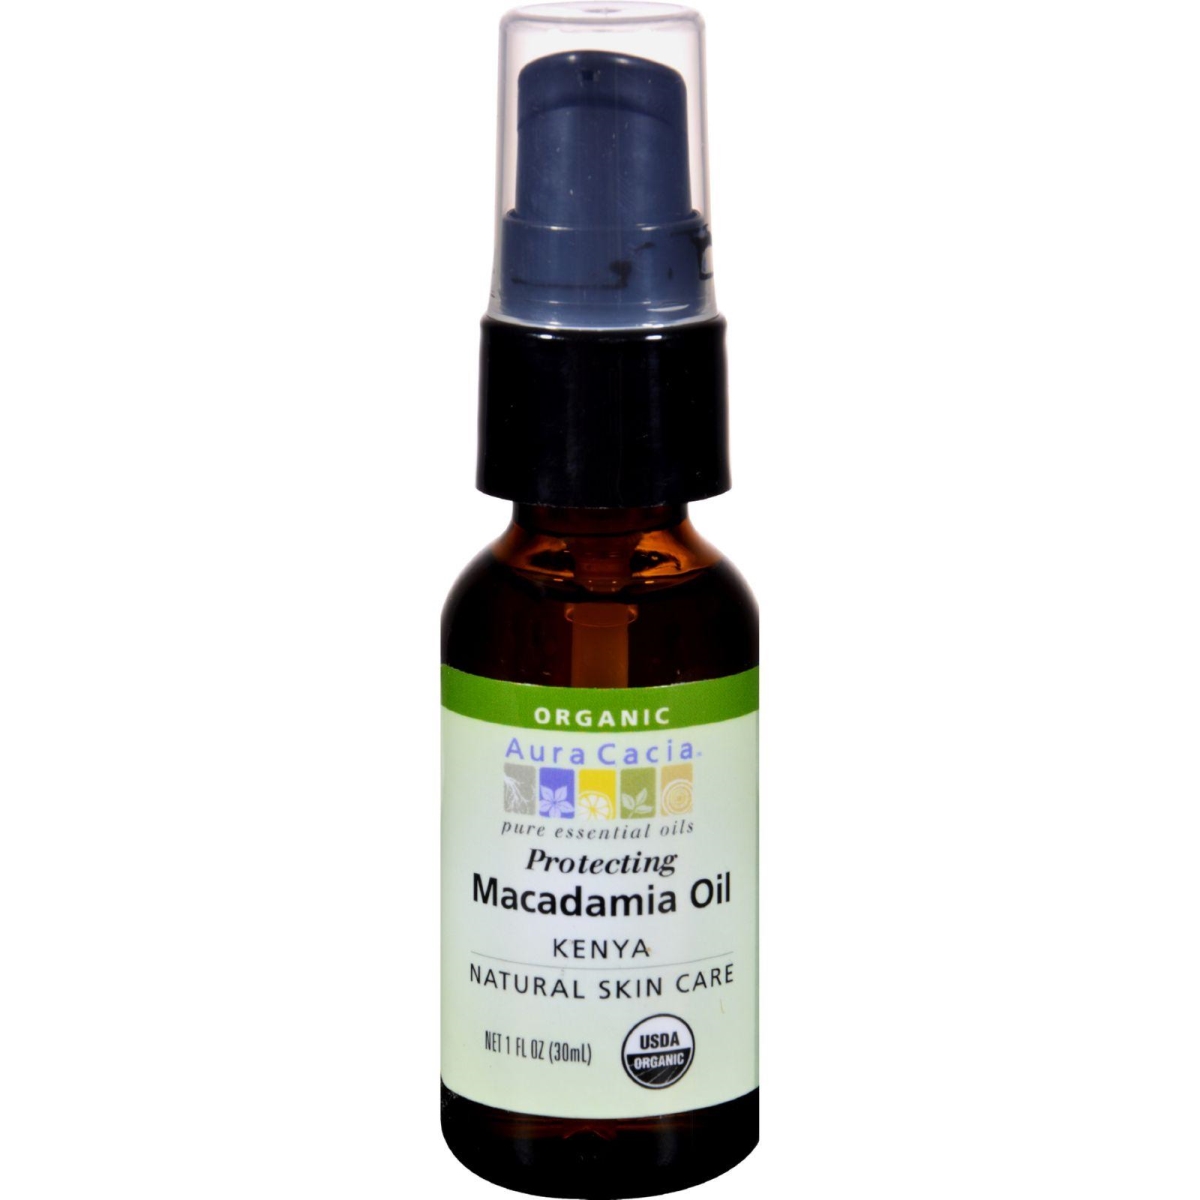 Hg0590604 1 Fl Oz Macadamia Skin Care Oil Certified Organic